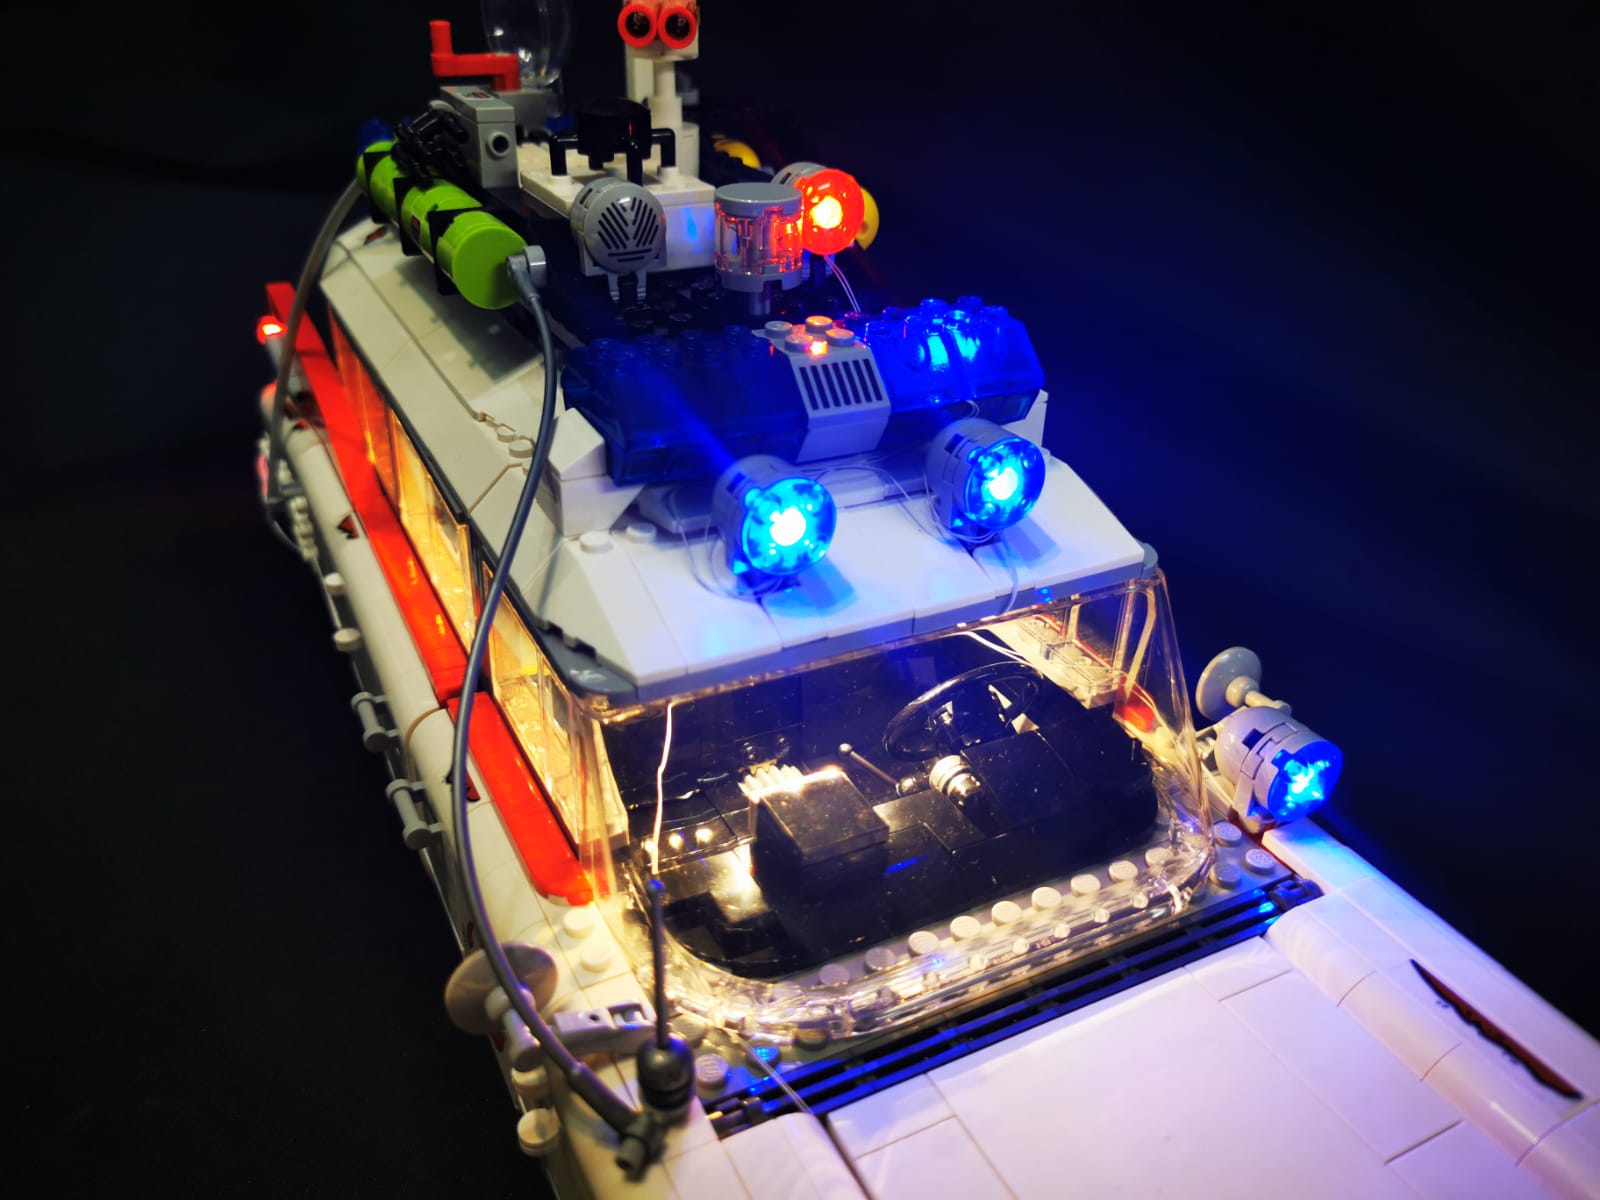 LED Lighting Kit for Lego Ghostbusters ECTO-1 10274 – BRICKSTARS